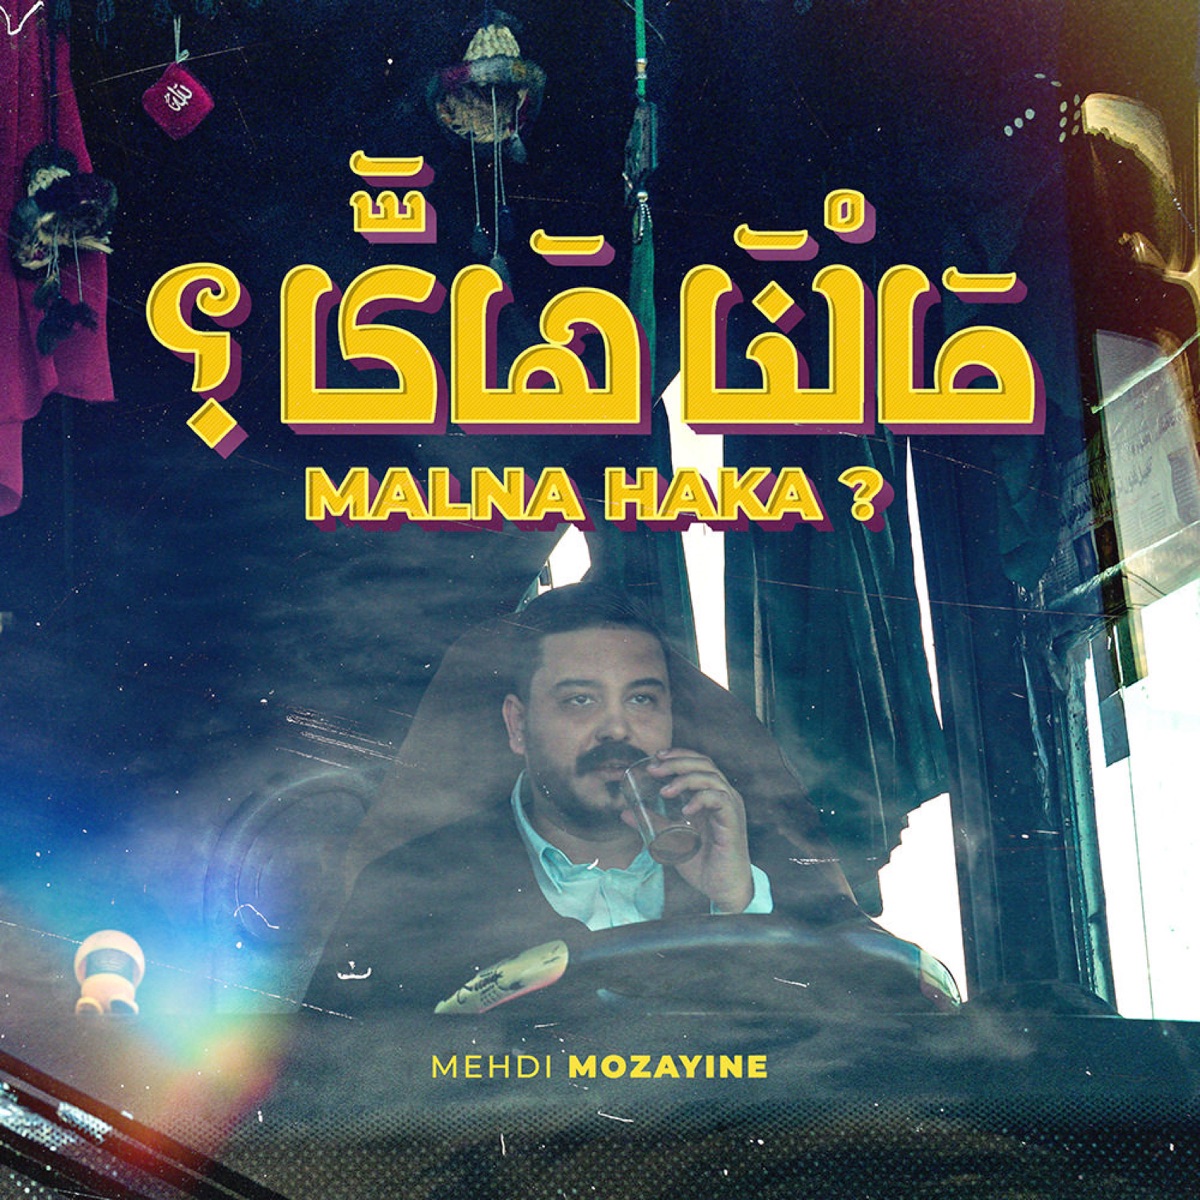 Malna haka ? - Single - Album by Mehdi Mozayine - Apple Music